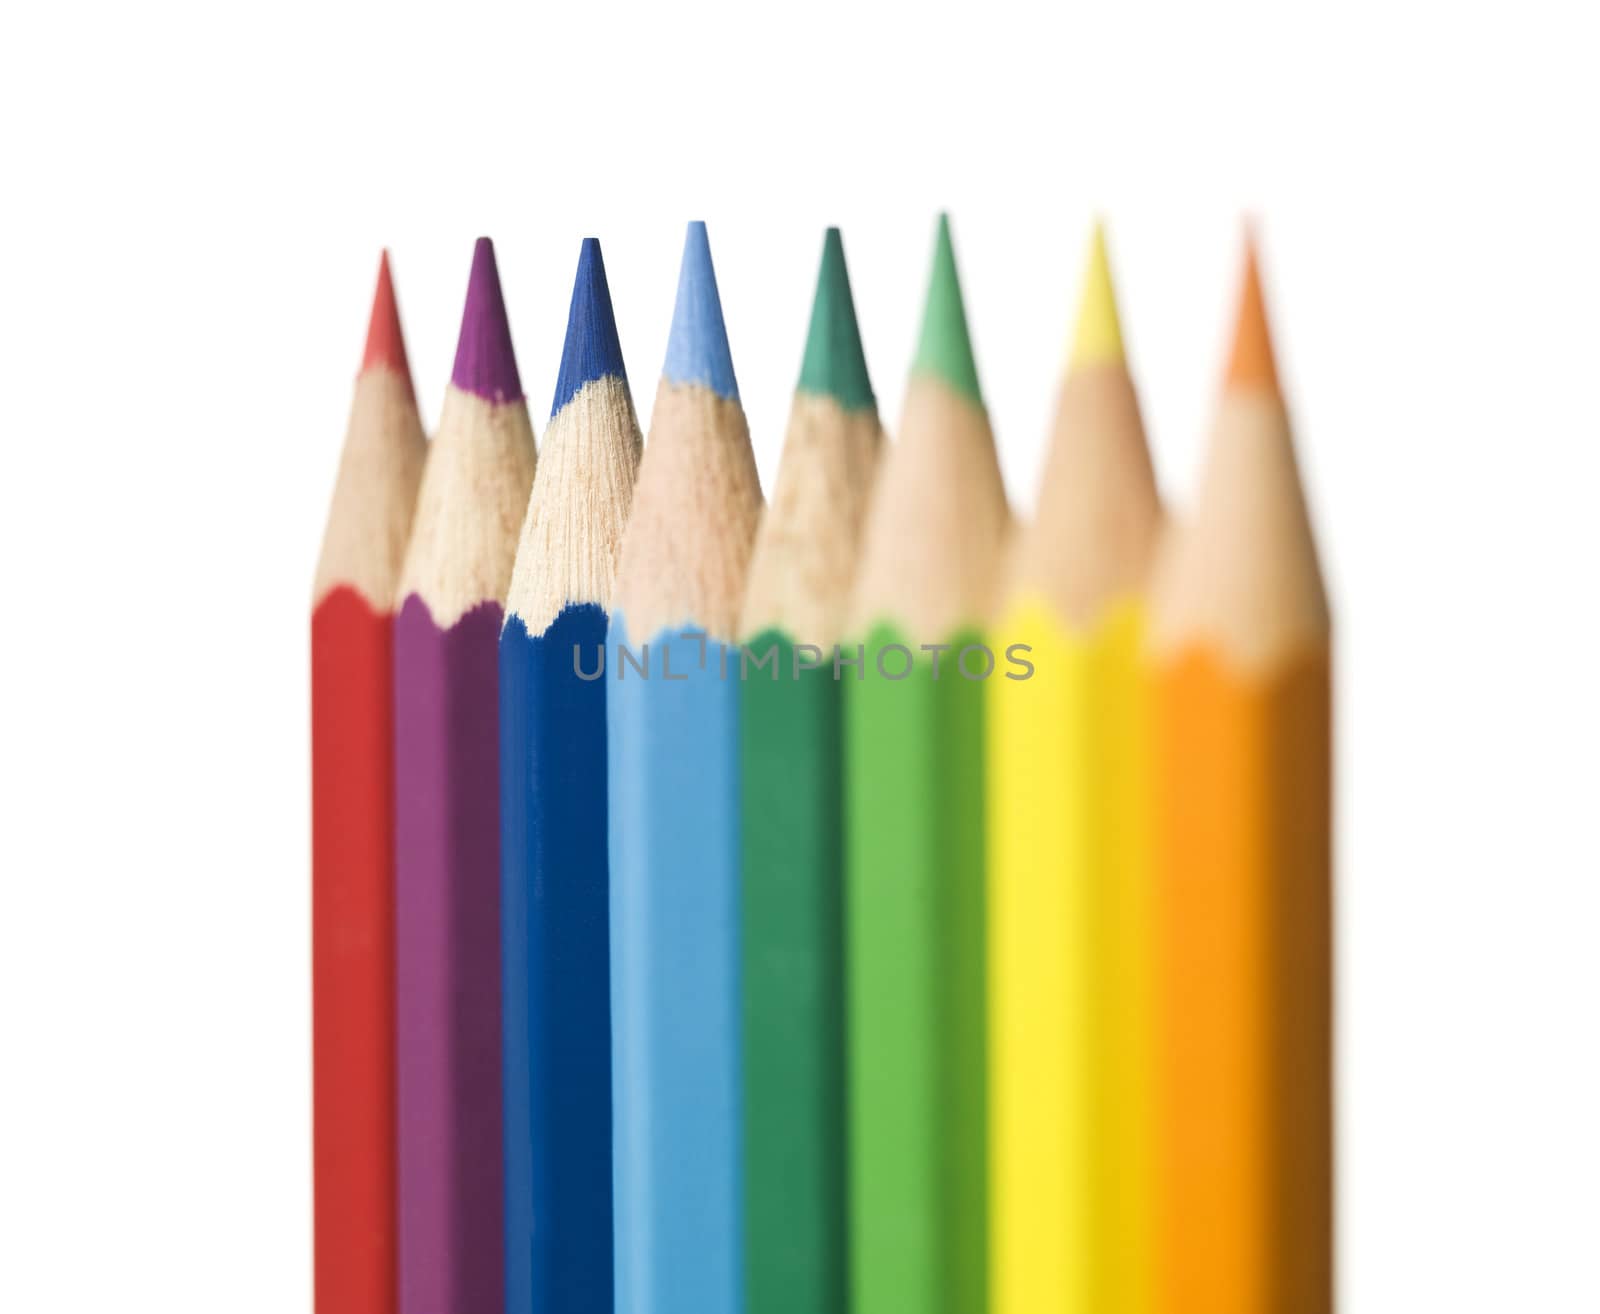 Row of color pencils by gemenacom